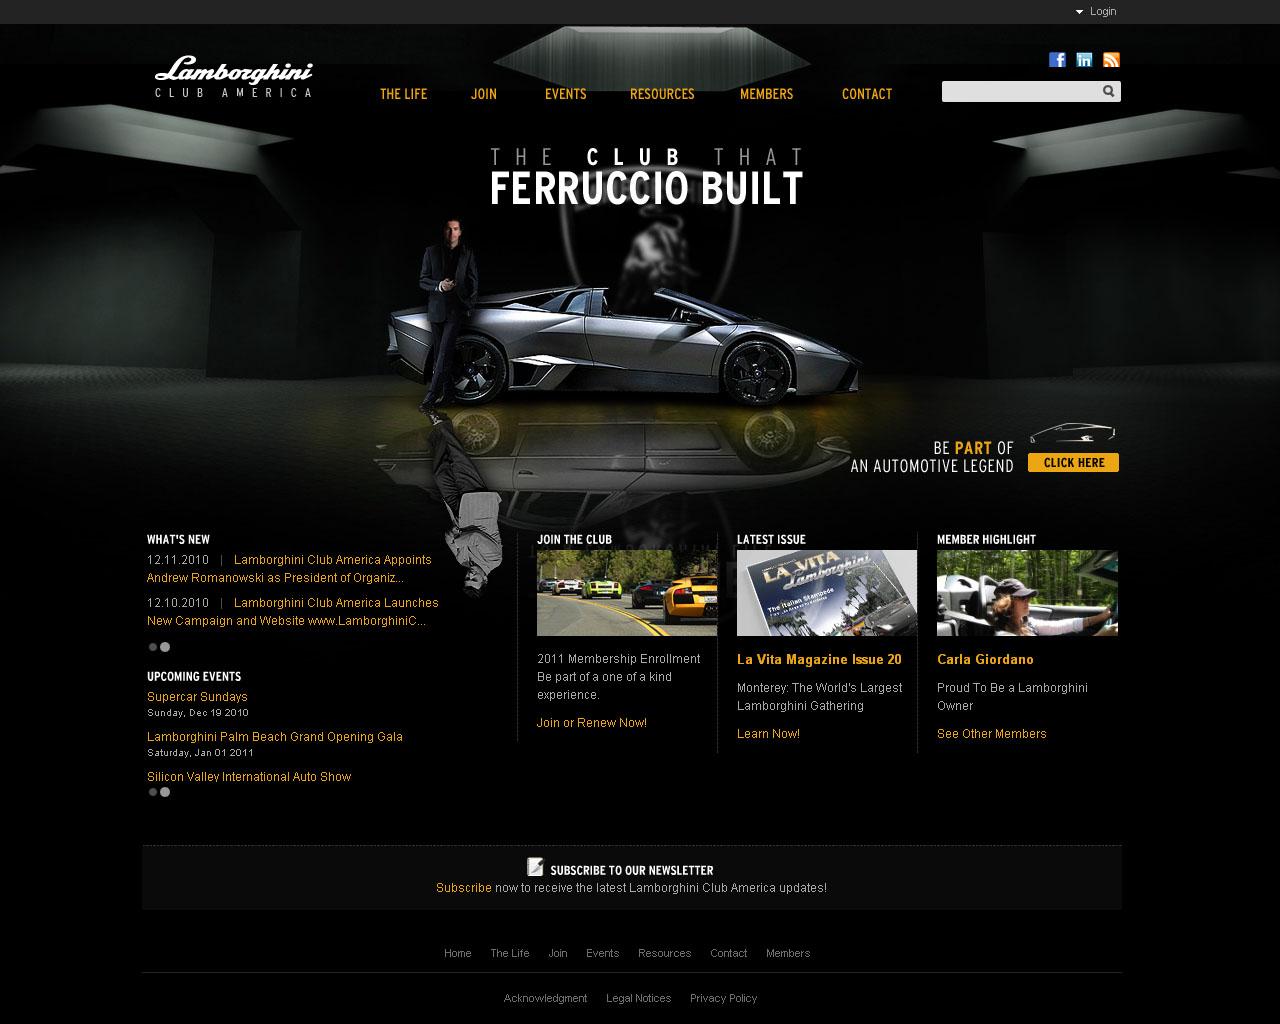 Lamborghini Club America Launches New Website 